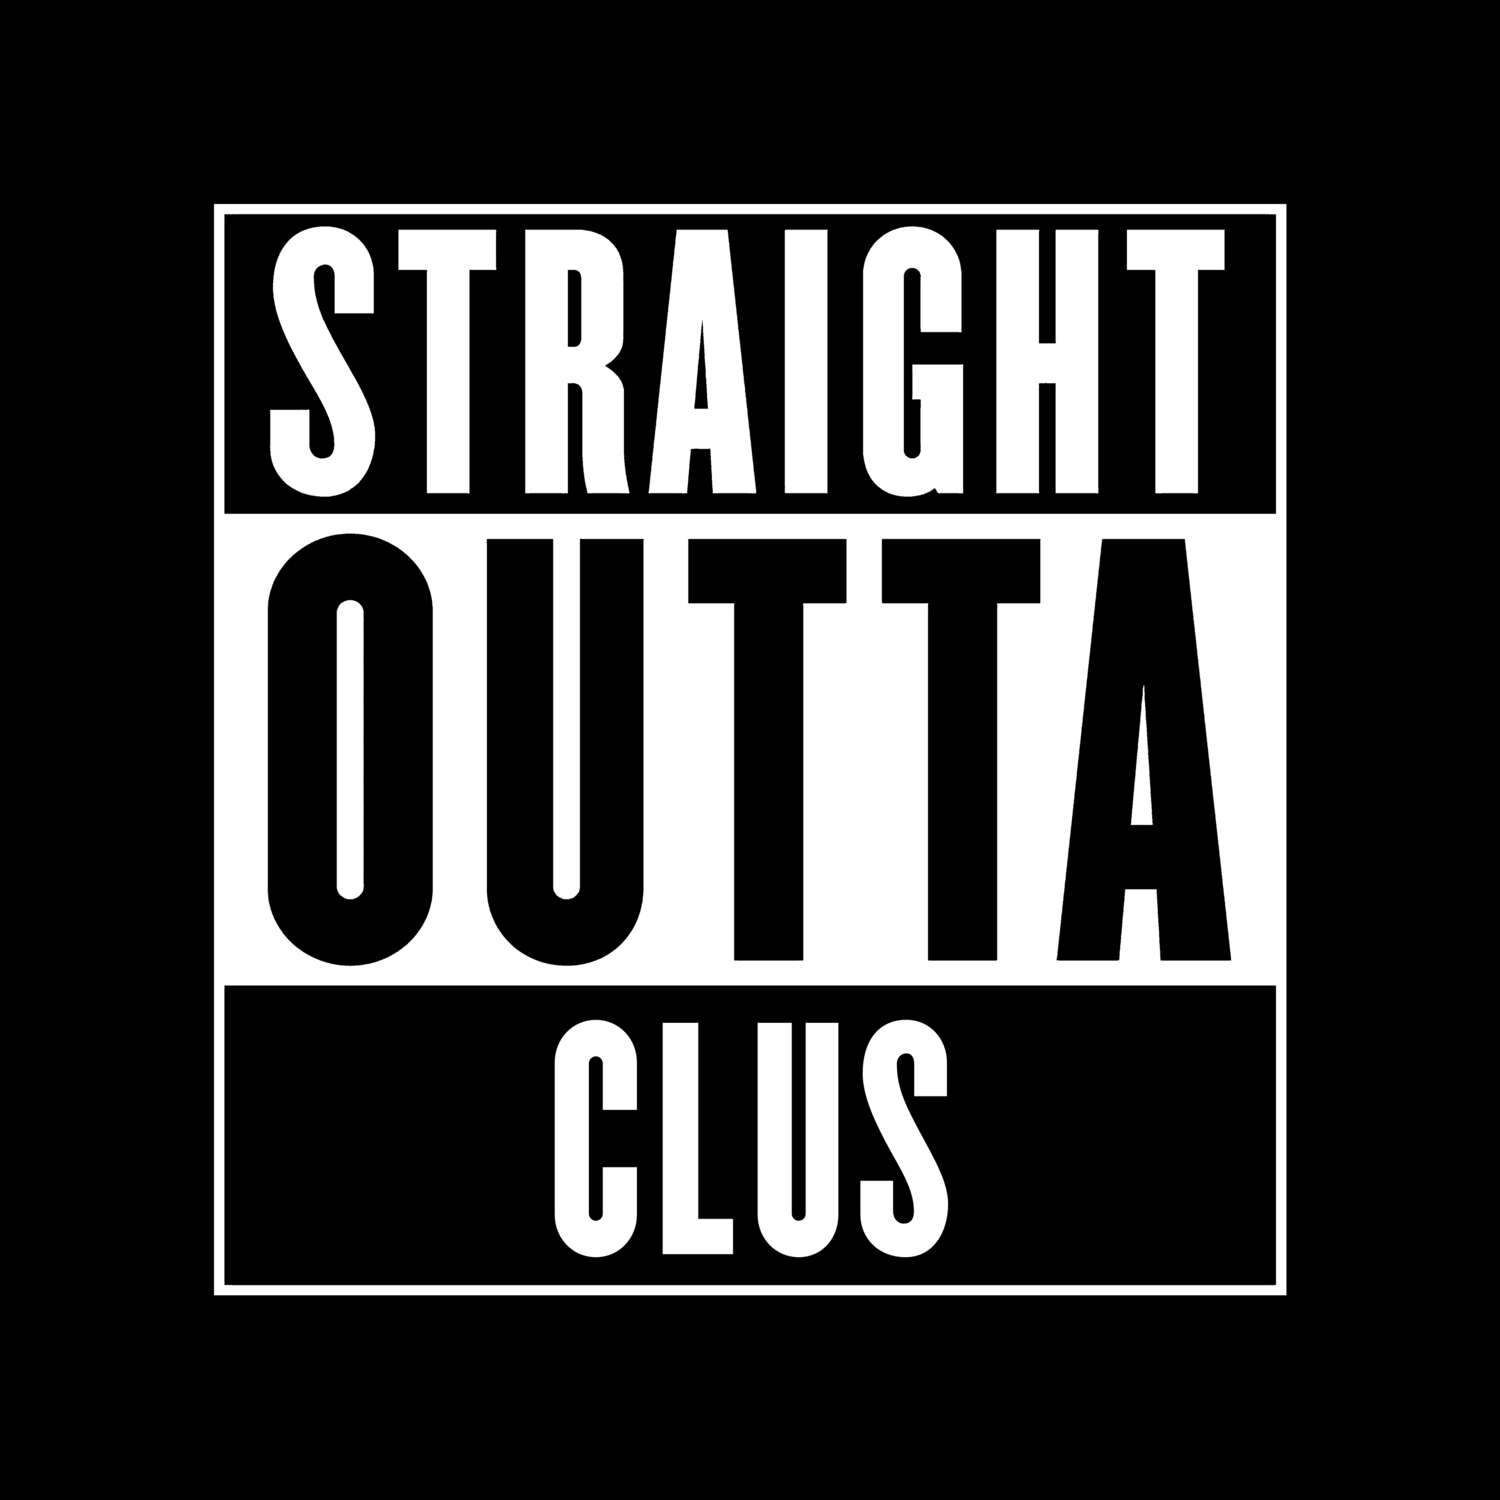 Clus T-Shirt »Straight Outta«